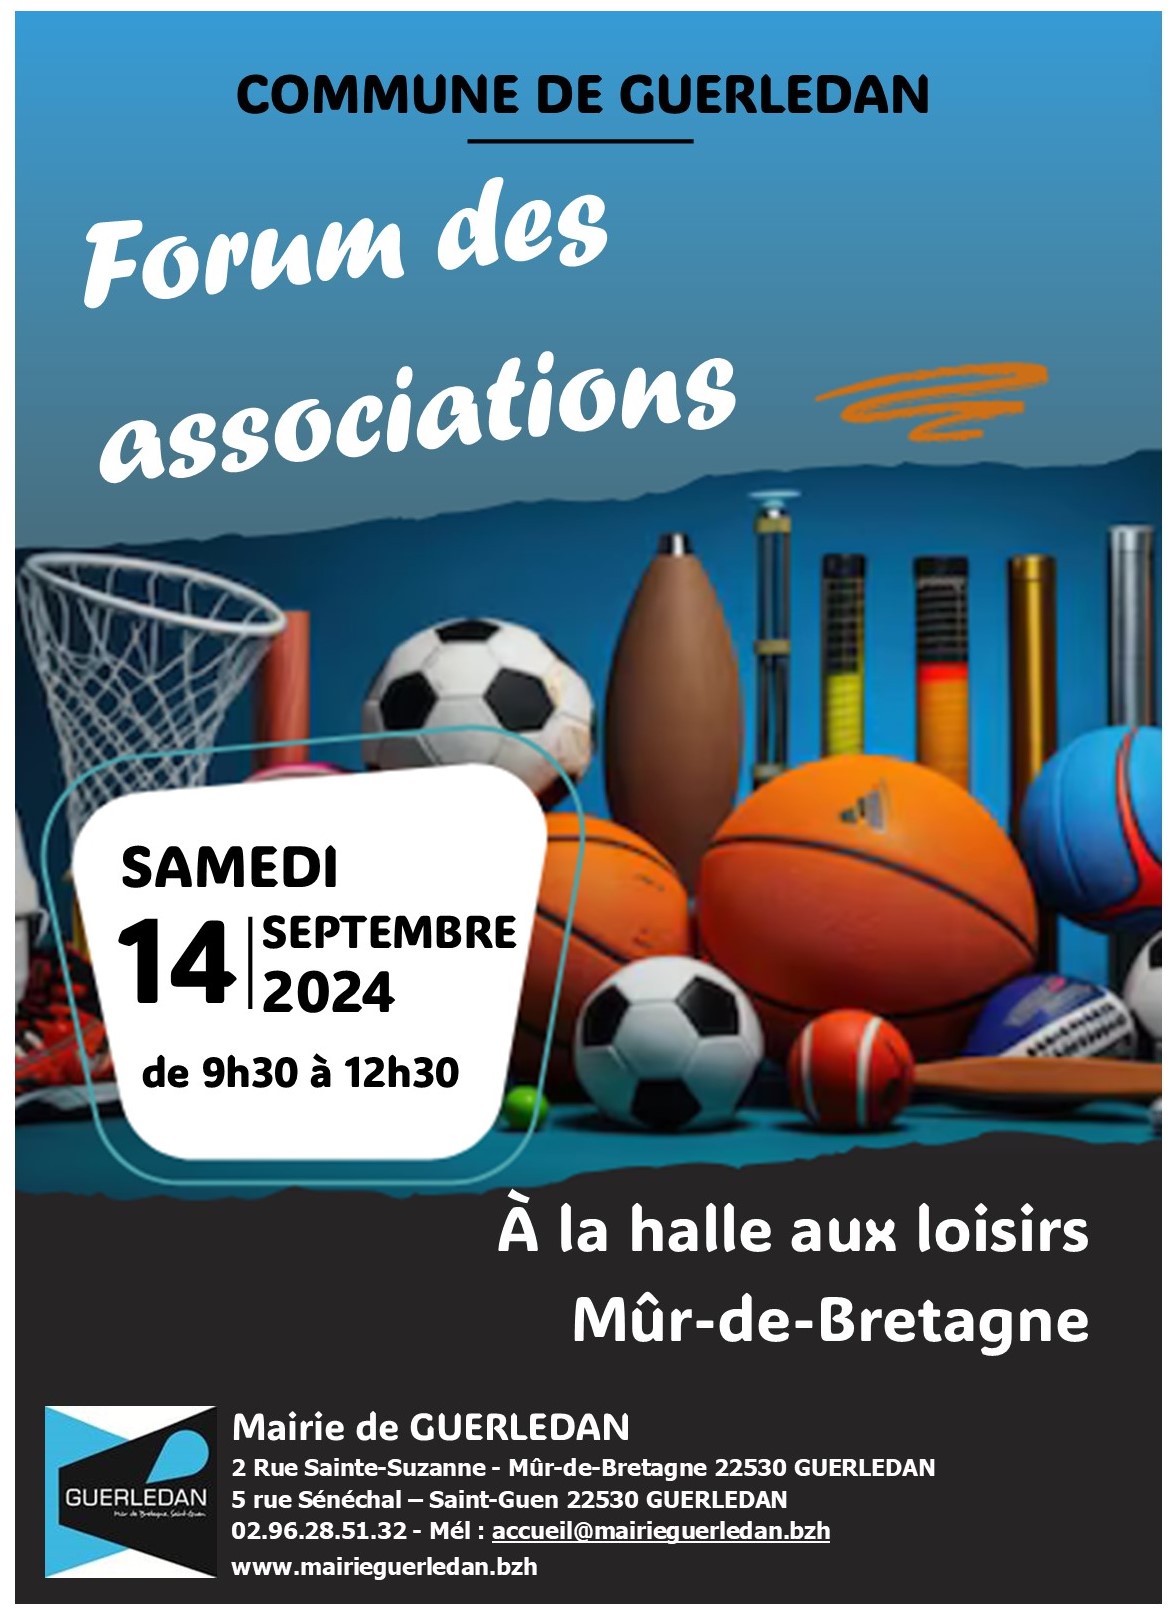 Forum des associations - Guerlédan